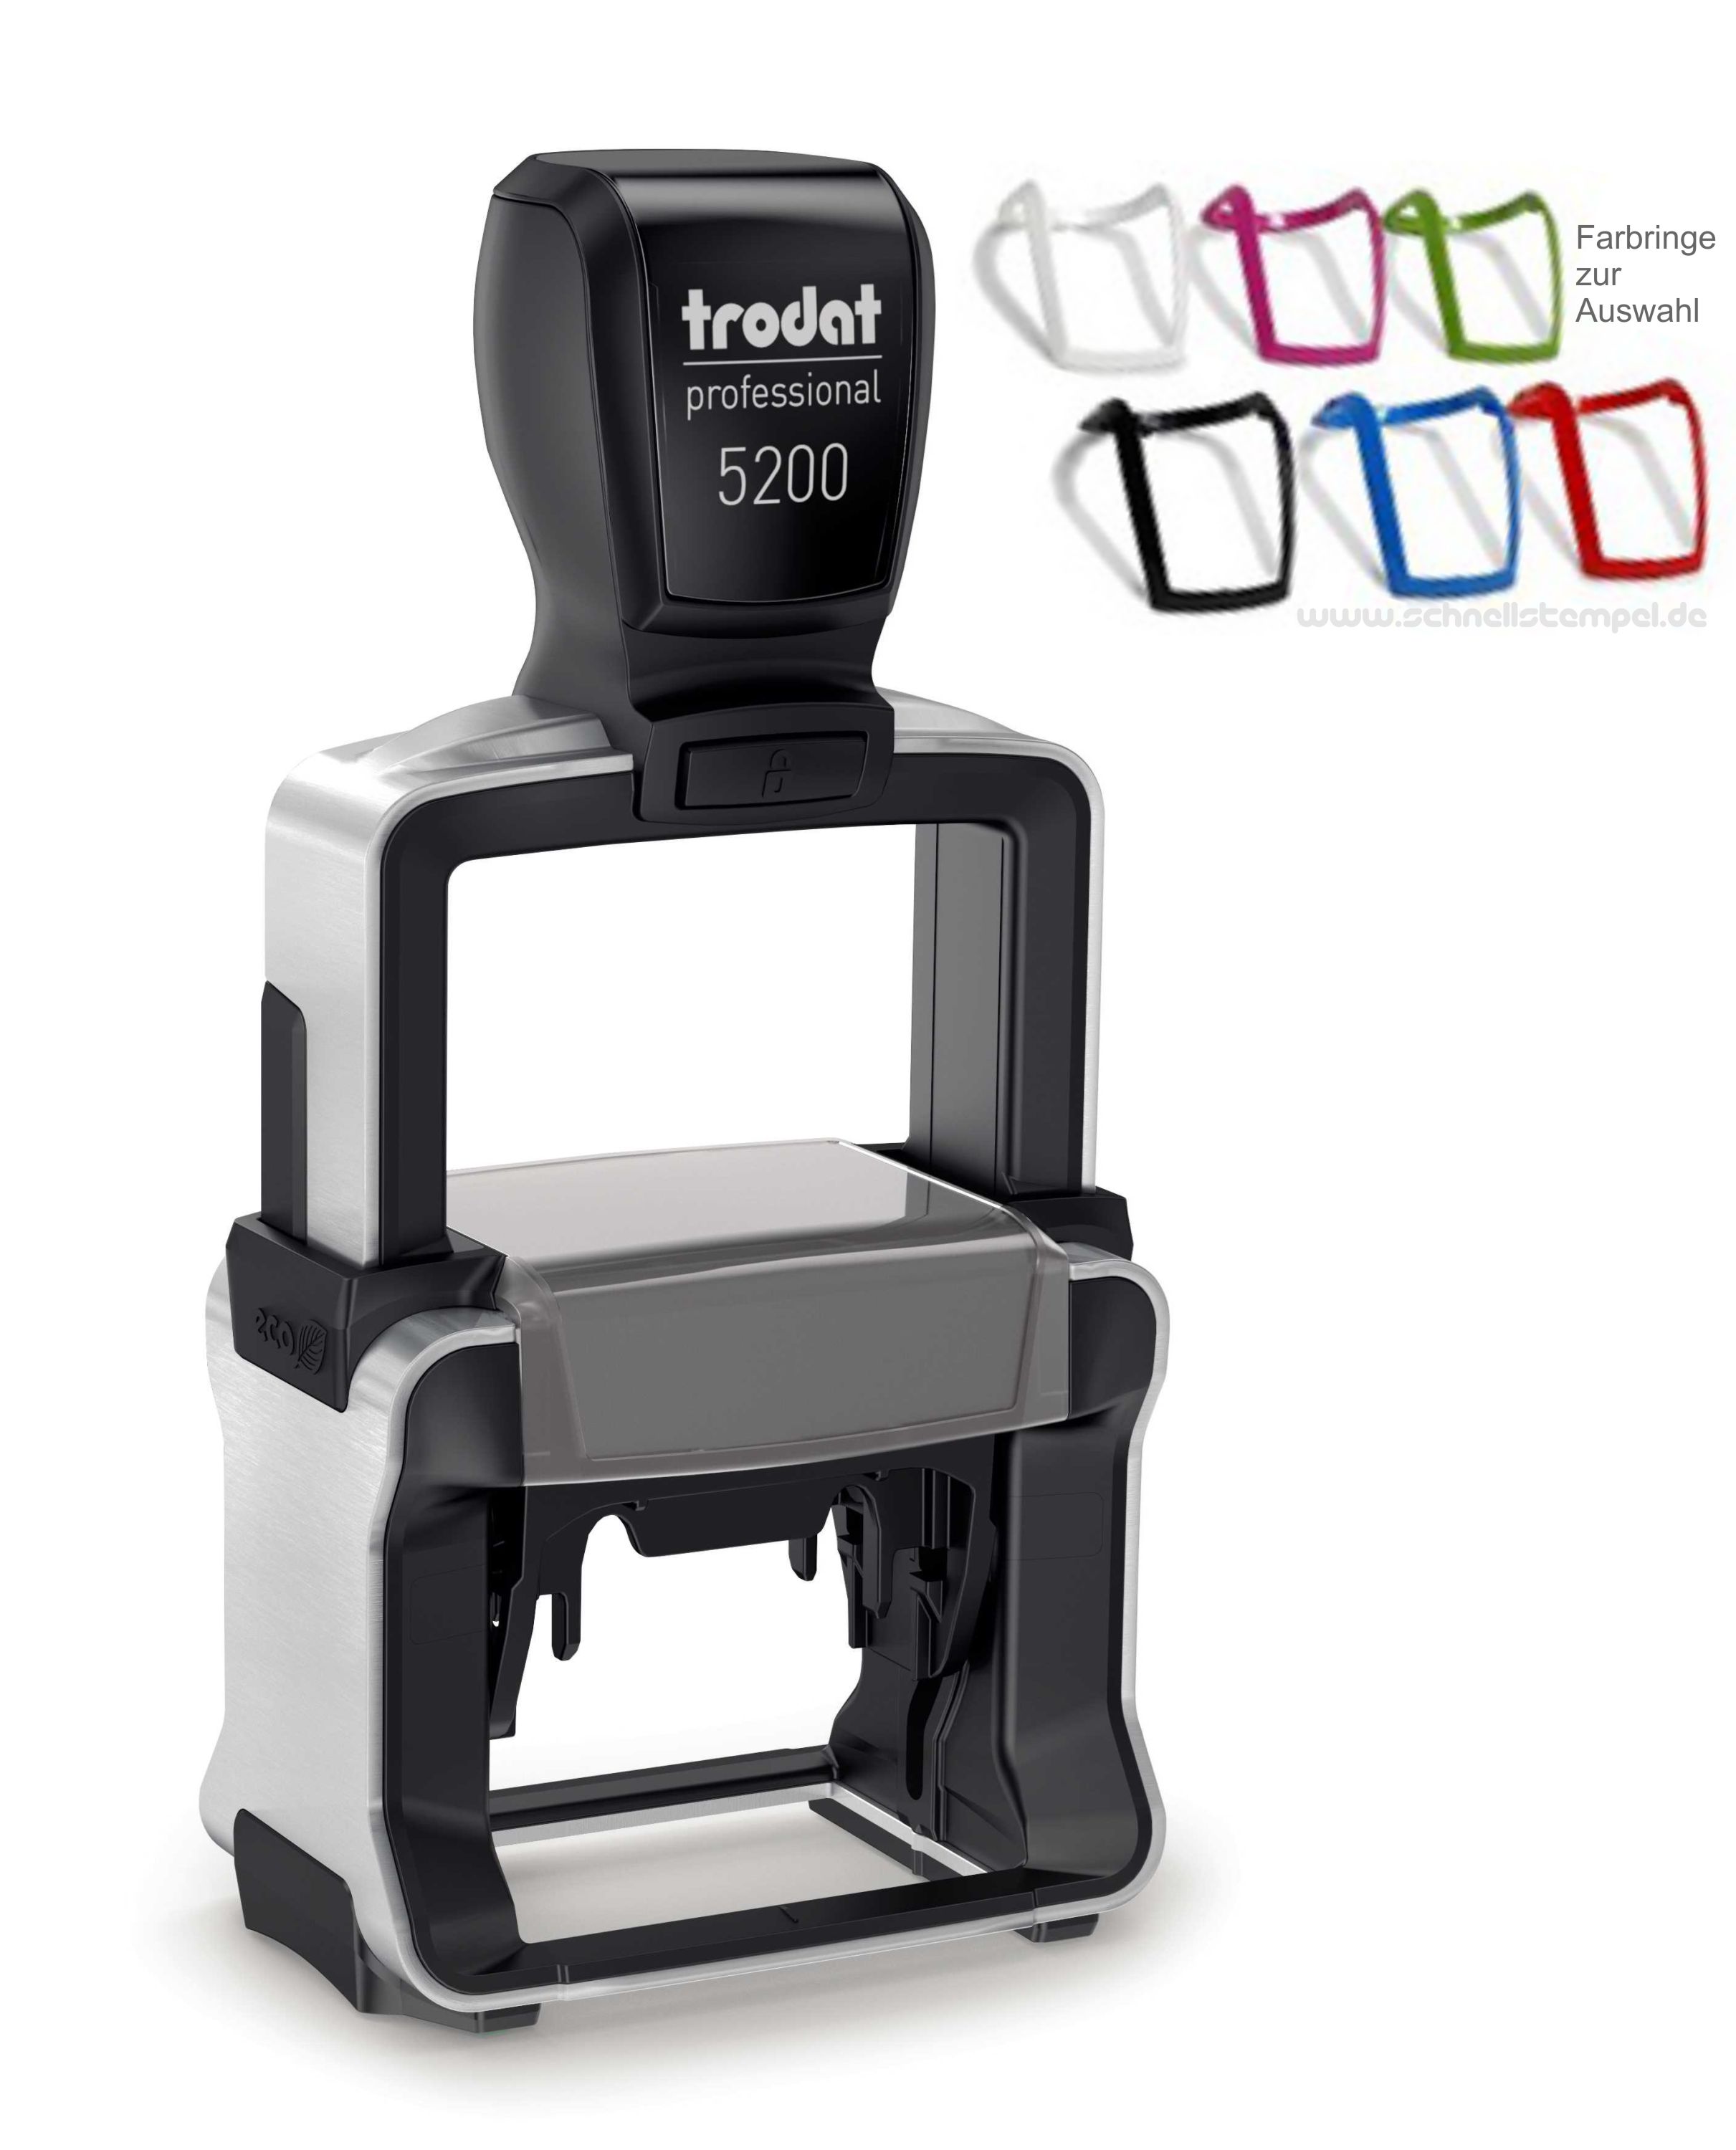 Trodat-Professional-5200-P4.0